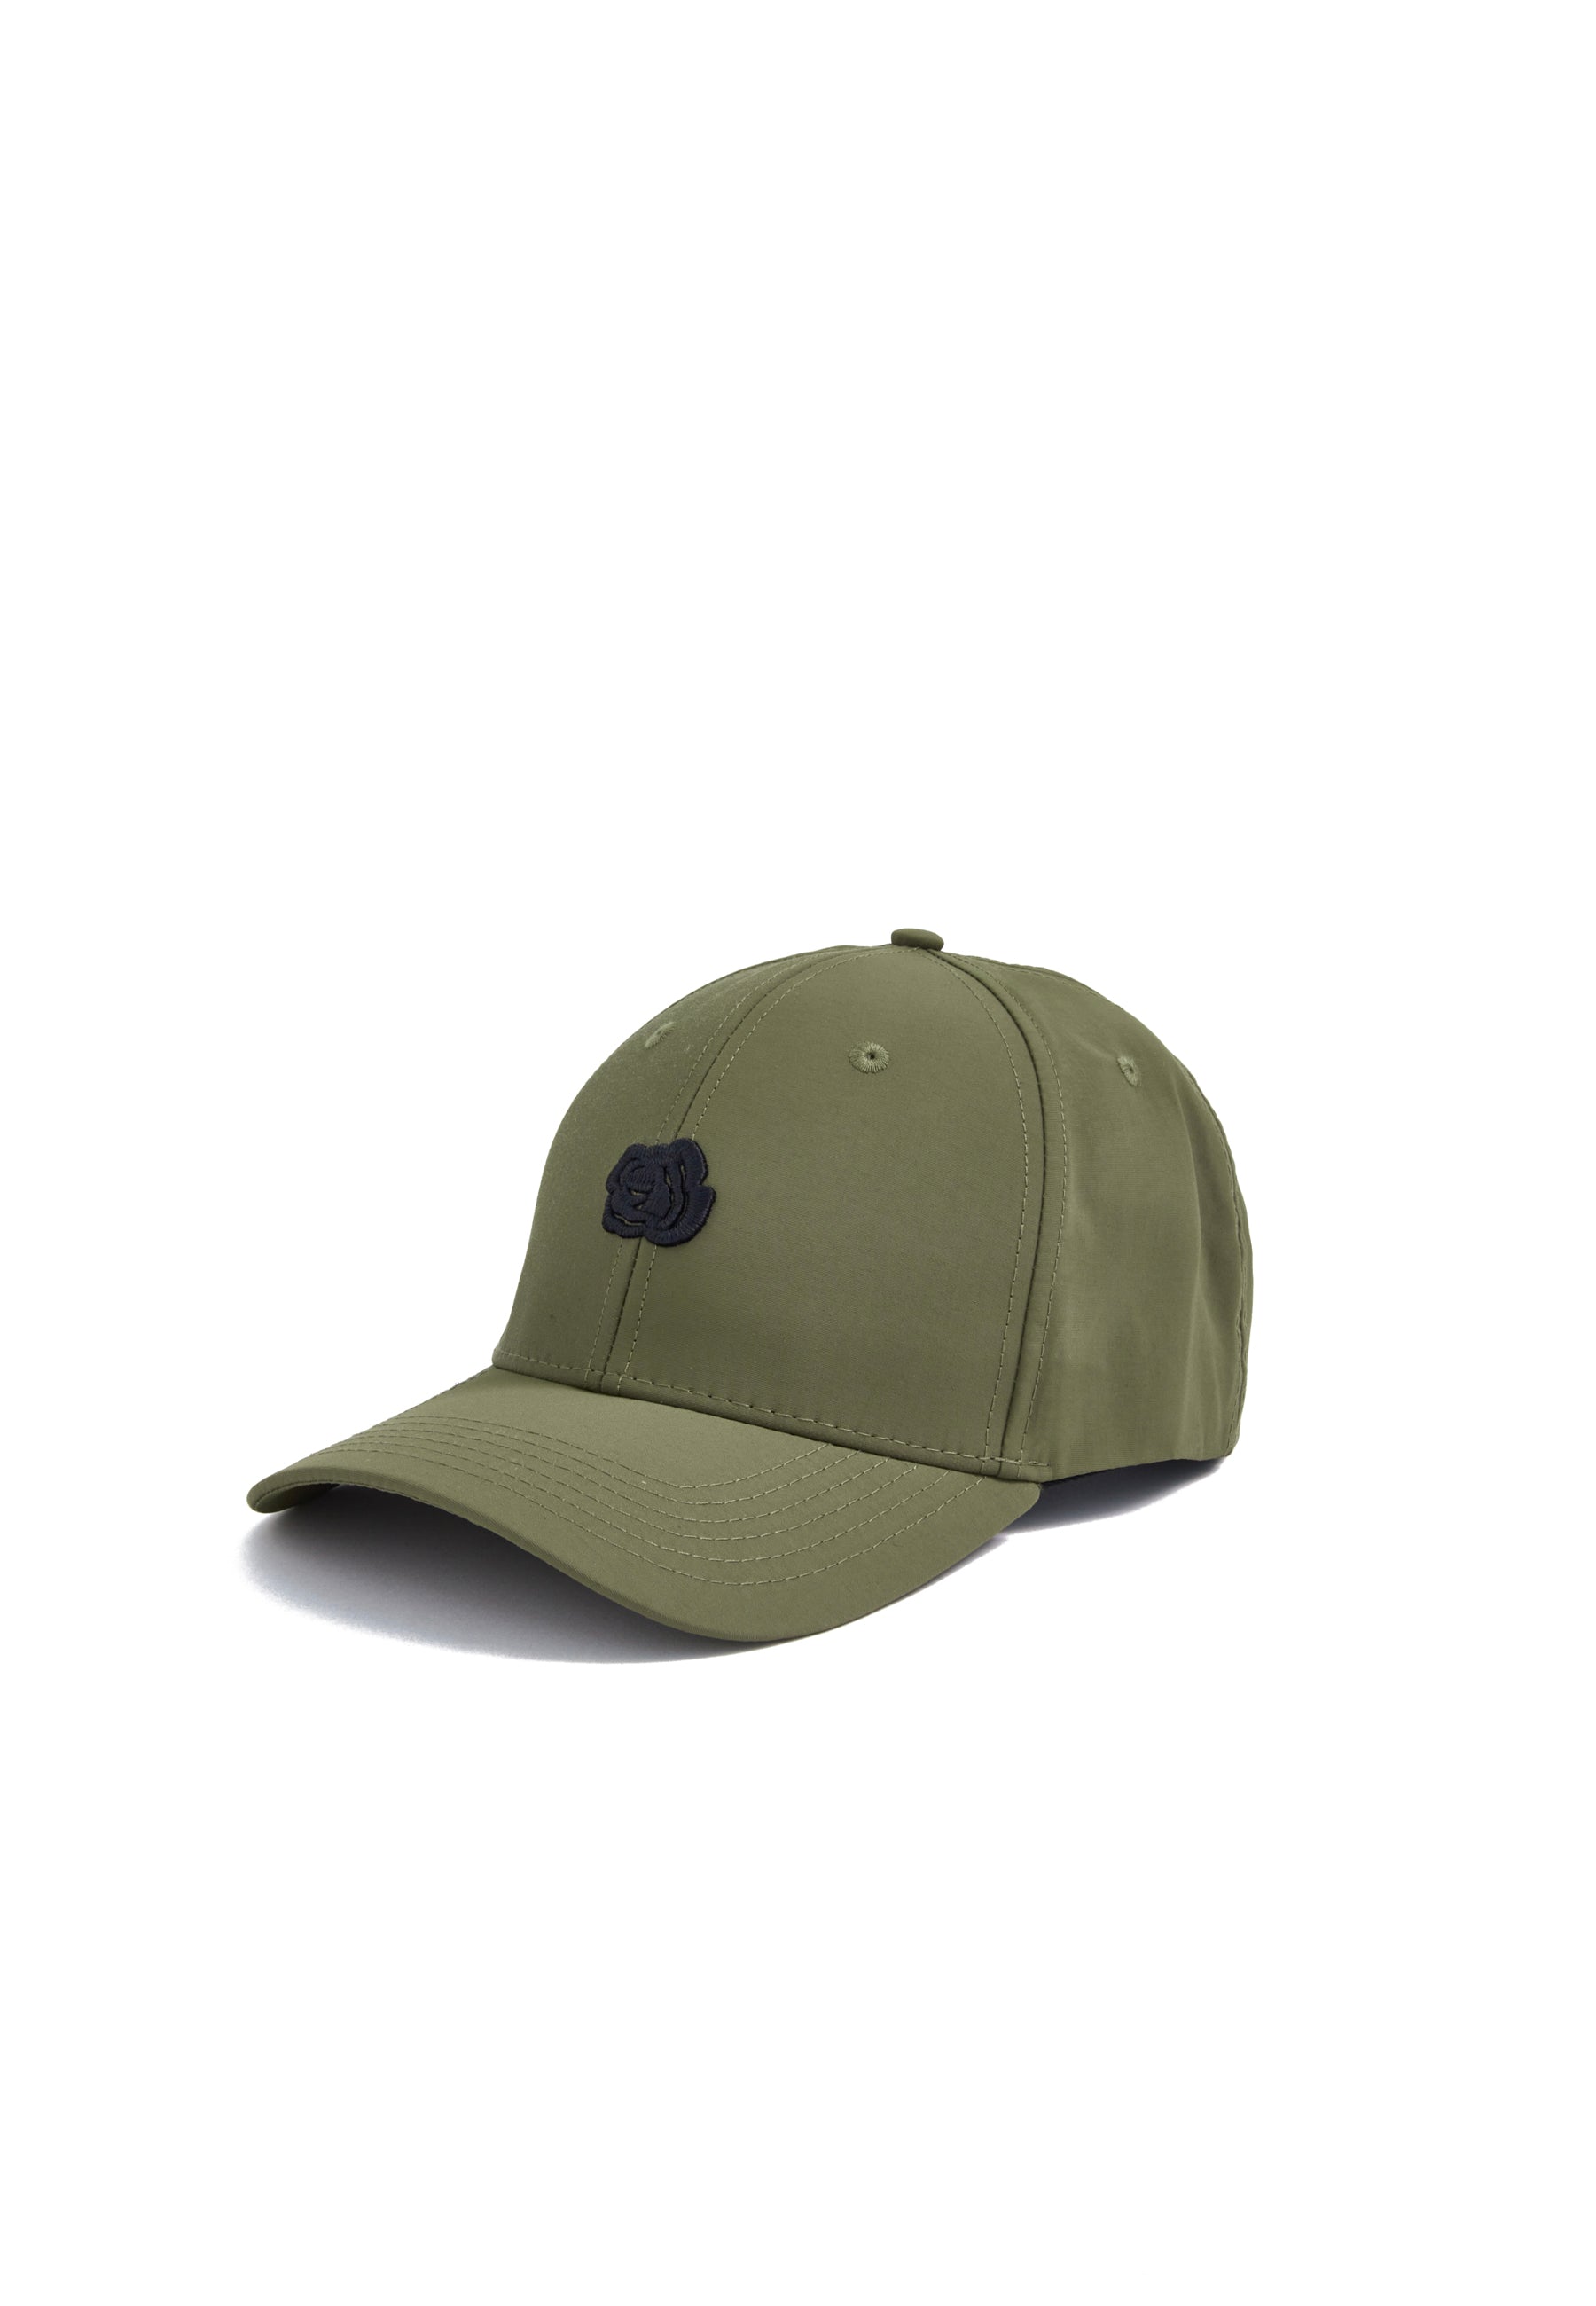 Rose Cap - Army Green